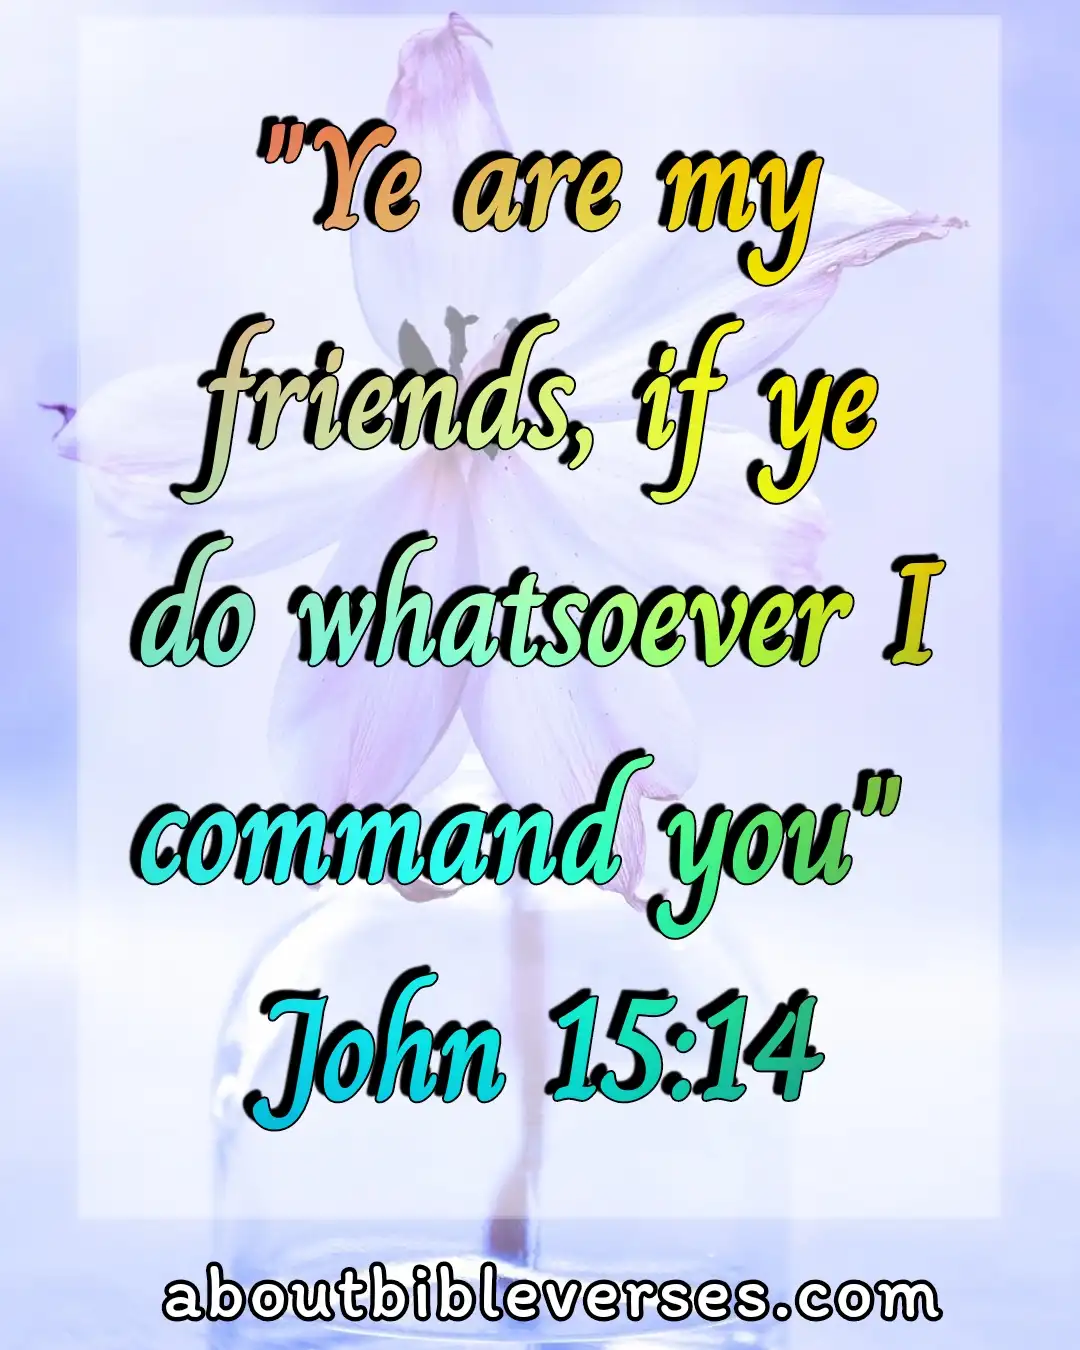 bible verses about Obedience (John 15:14)